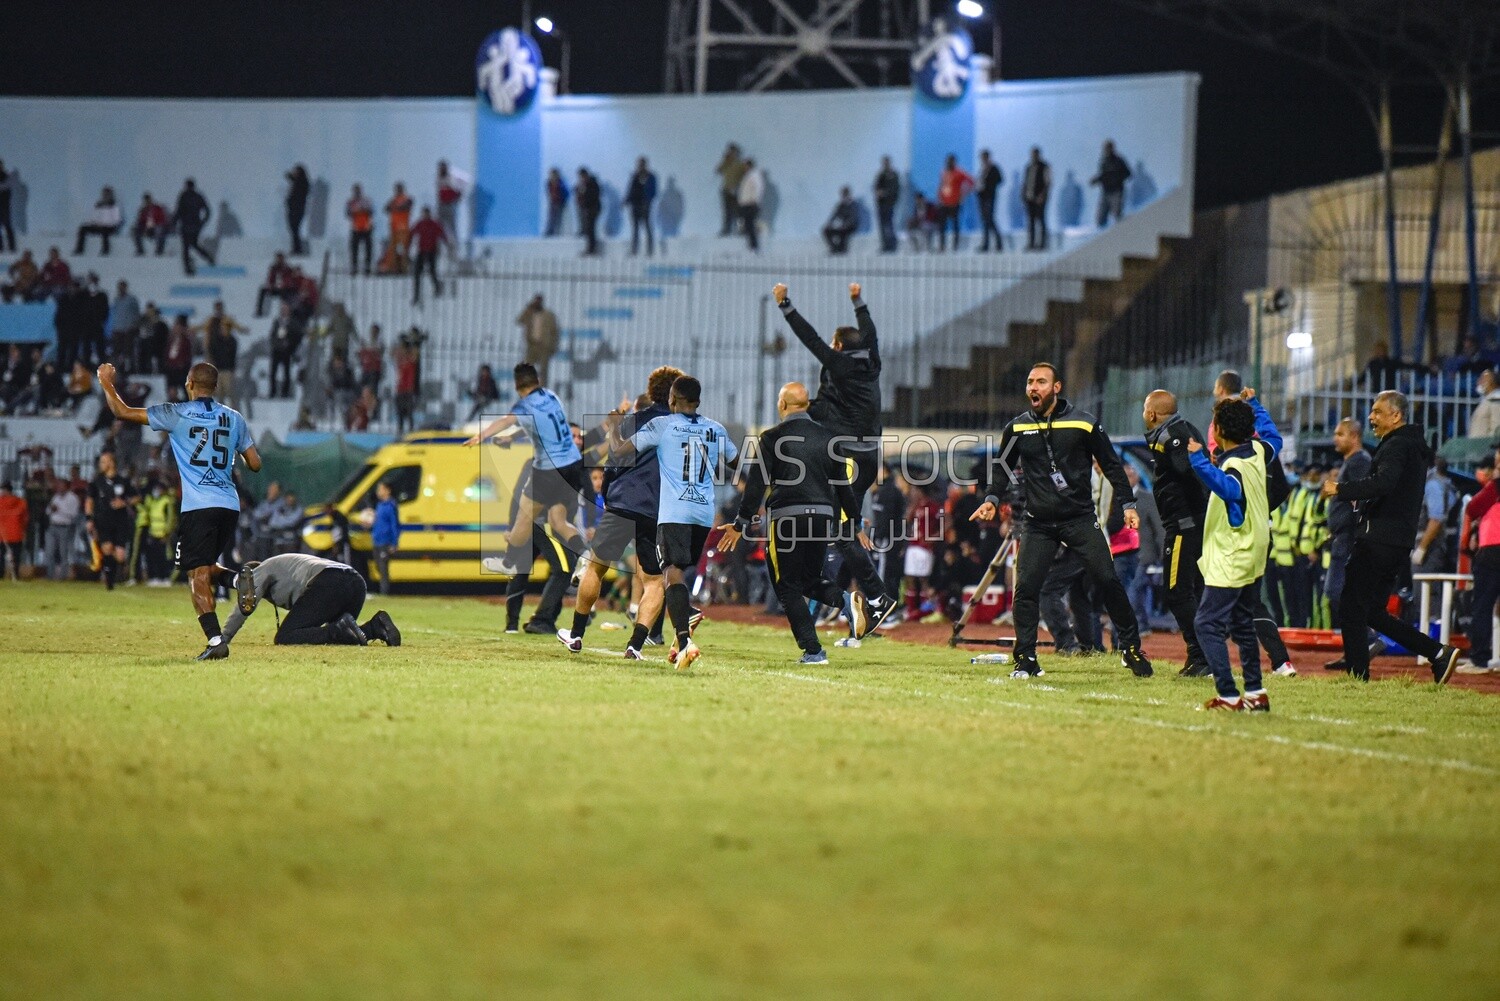 Football team members celebrate winning the match